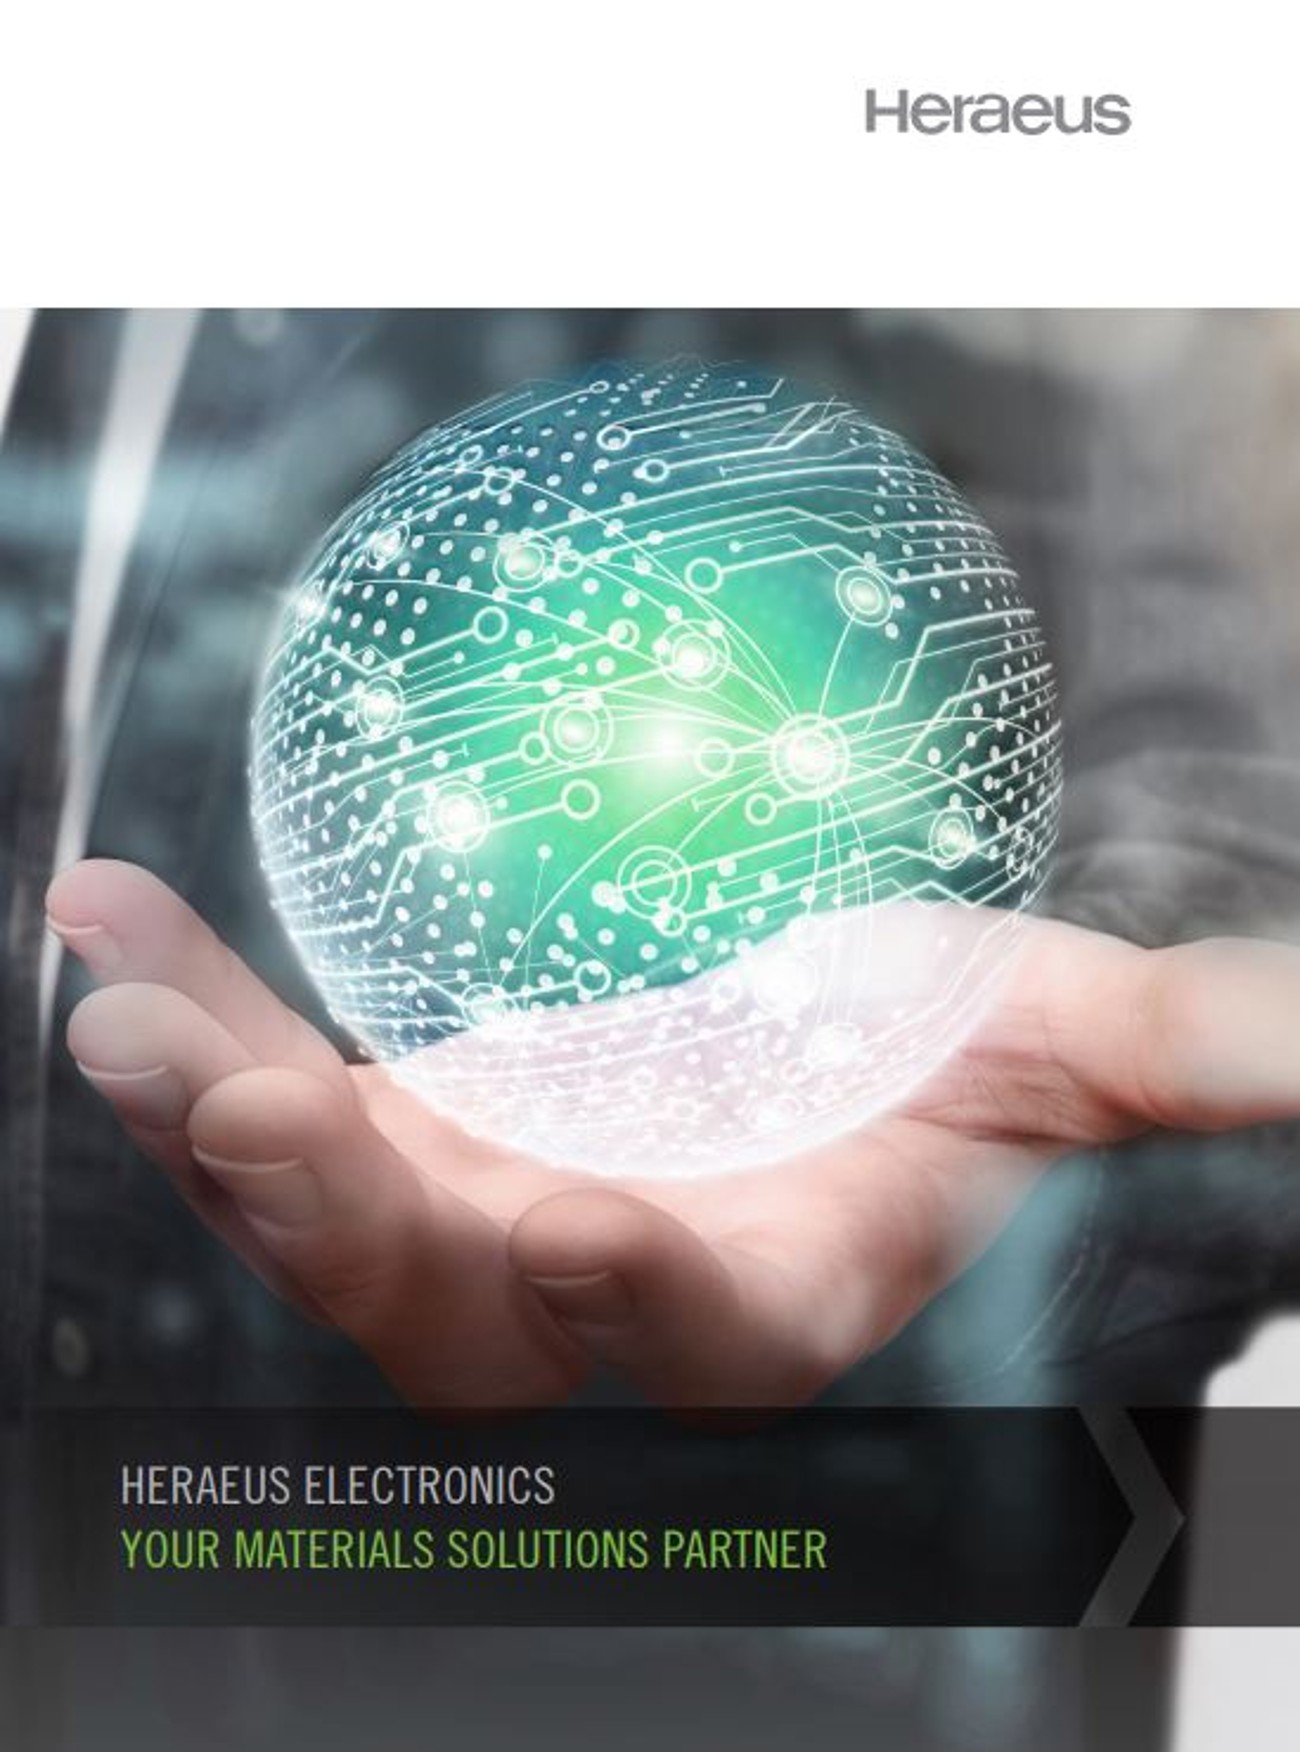 Heraeus Electronics: Your Materials Solutions Partner